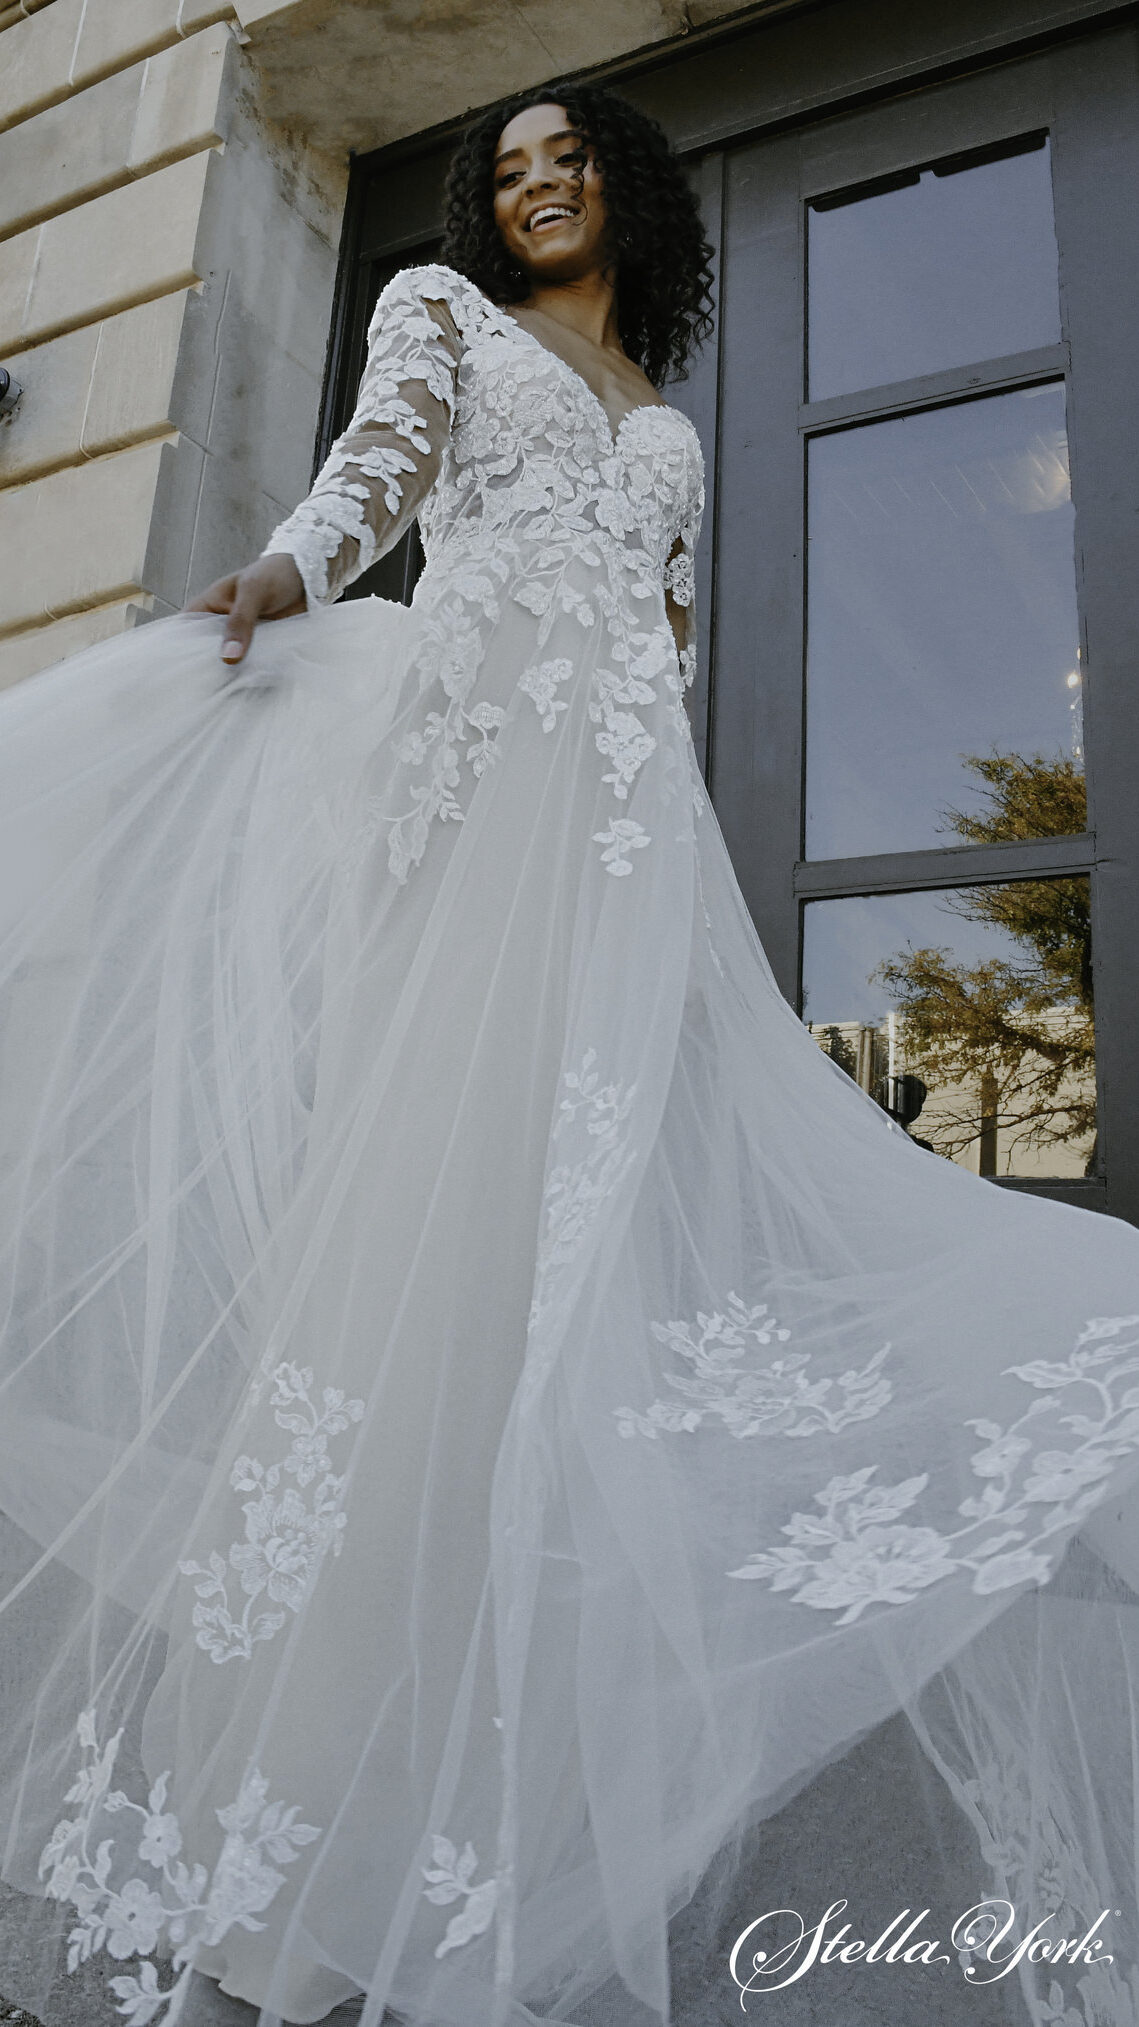 Lace Wedding Dress by Stella York 2020 - 7289-SS3